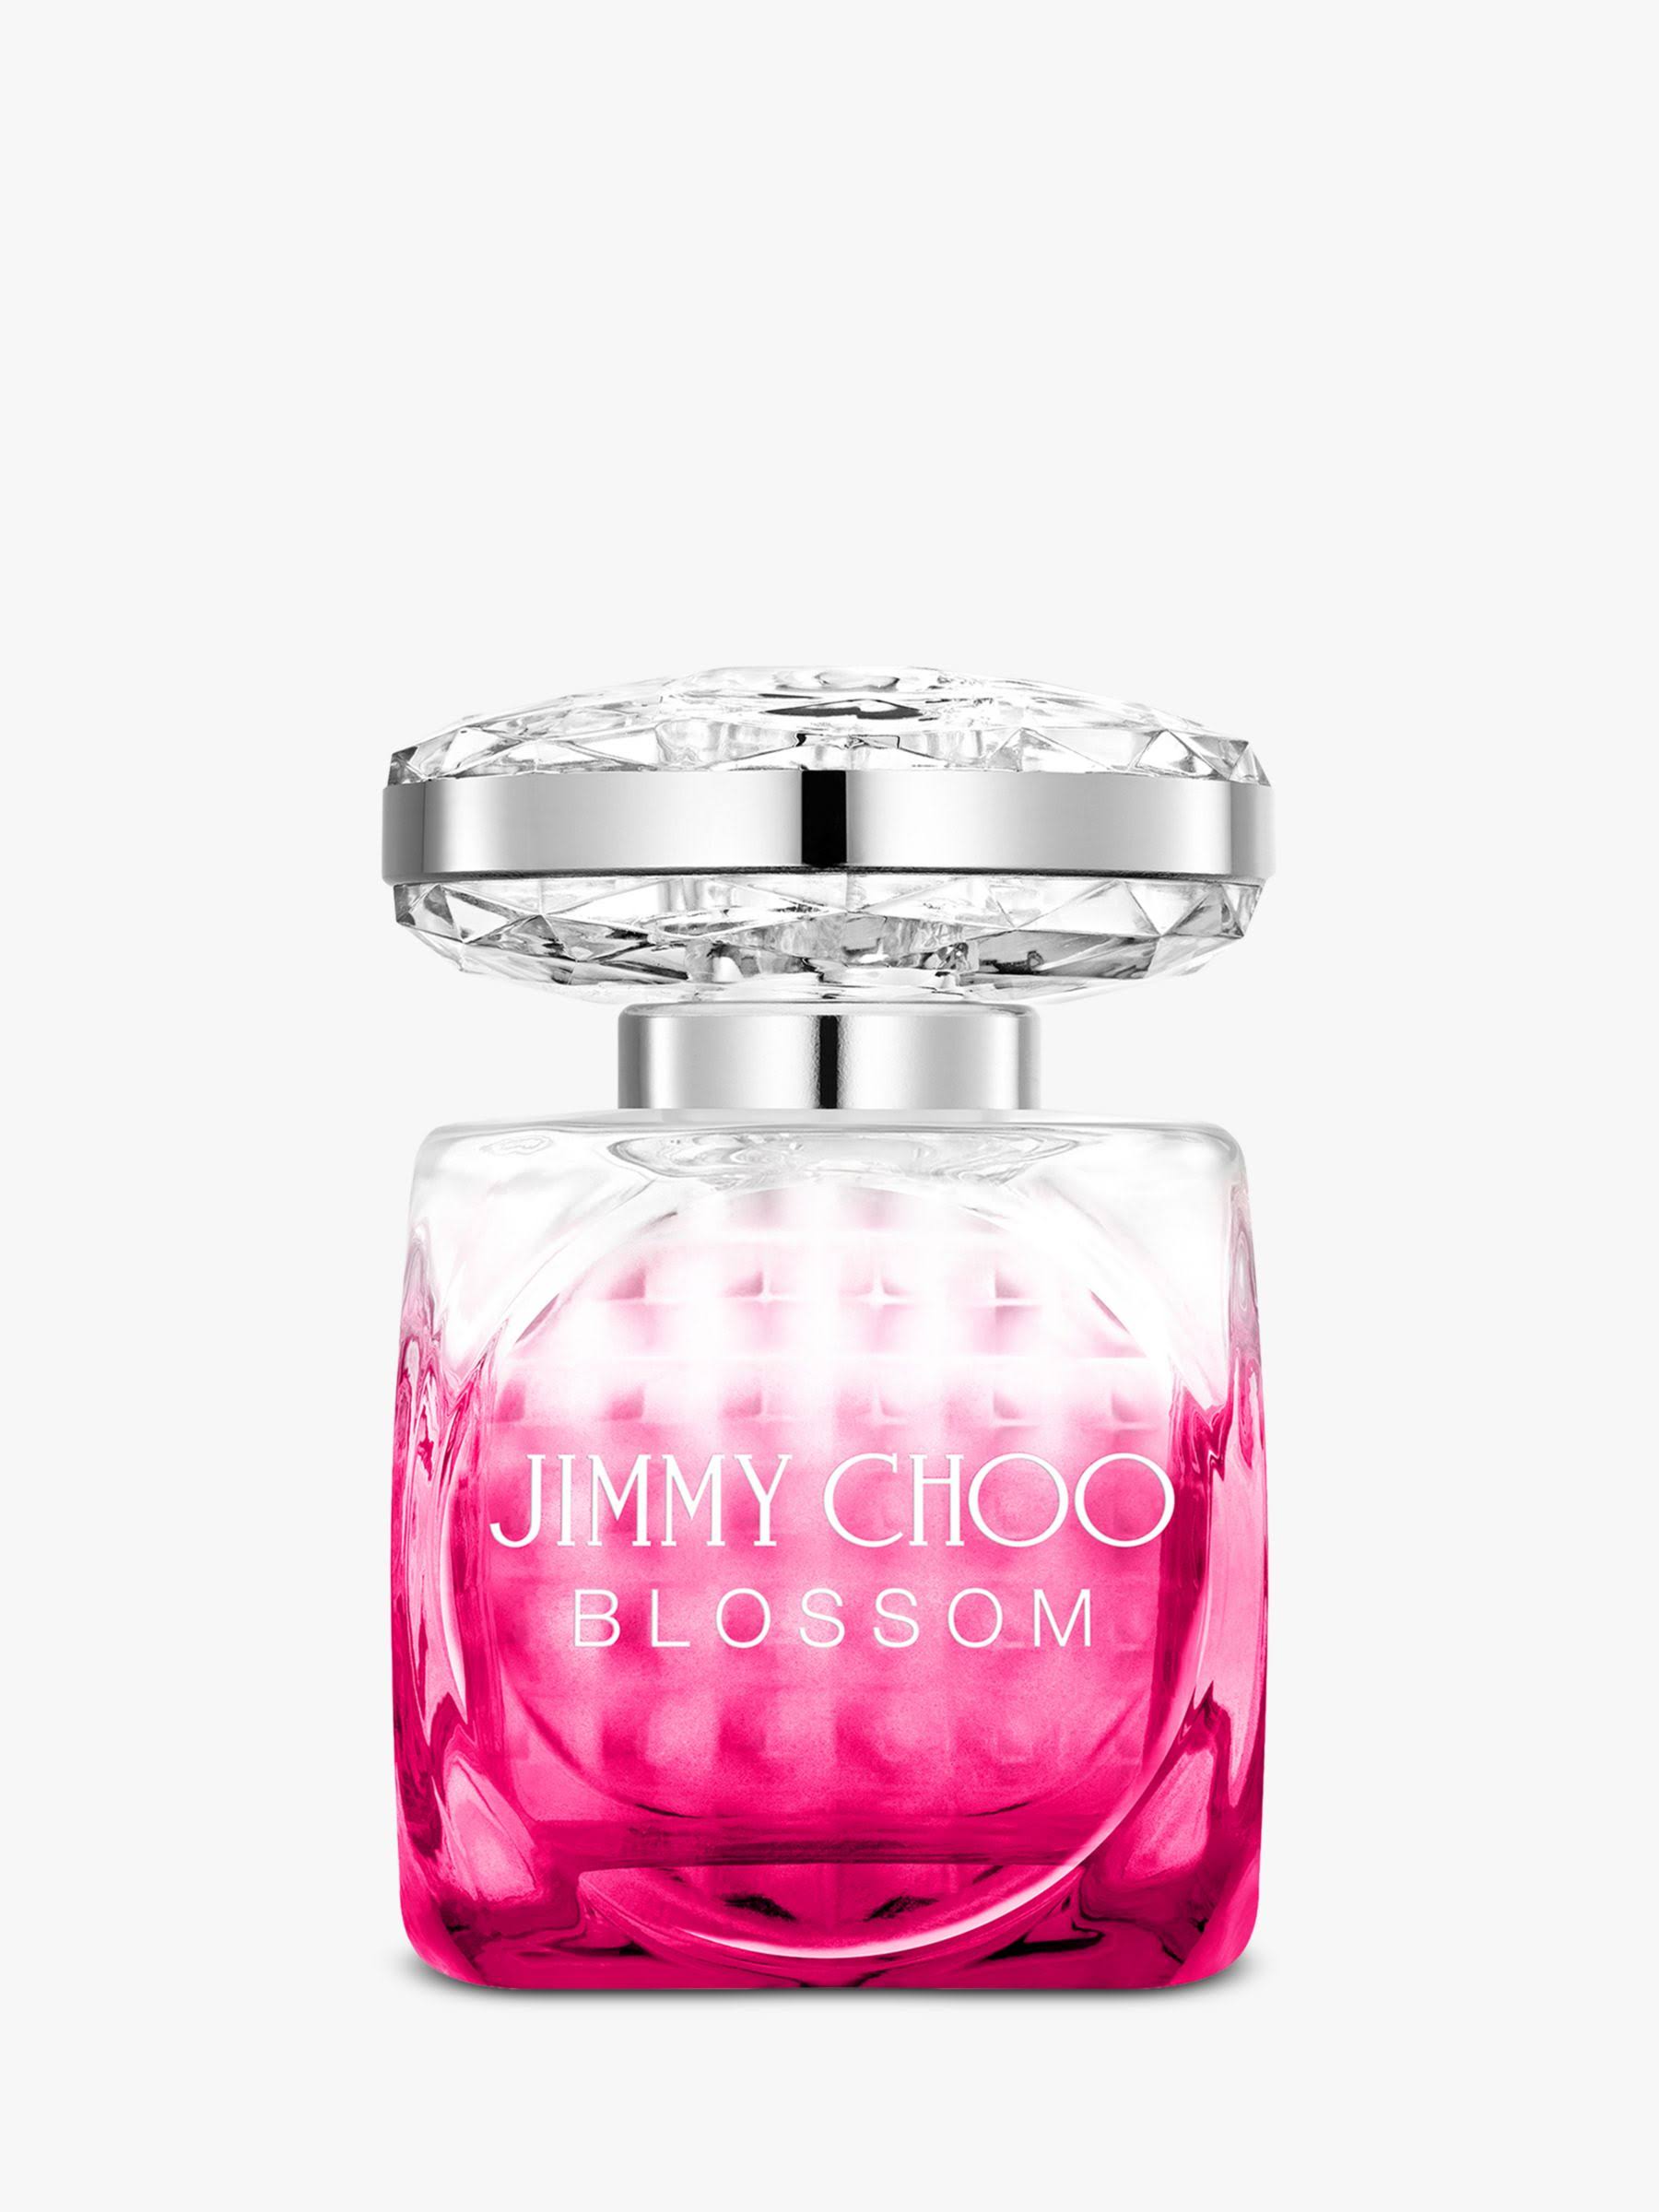 Jimmy Choo Blossom Eau De Parfum Spray - 1.3 fl oz bottle